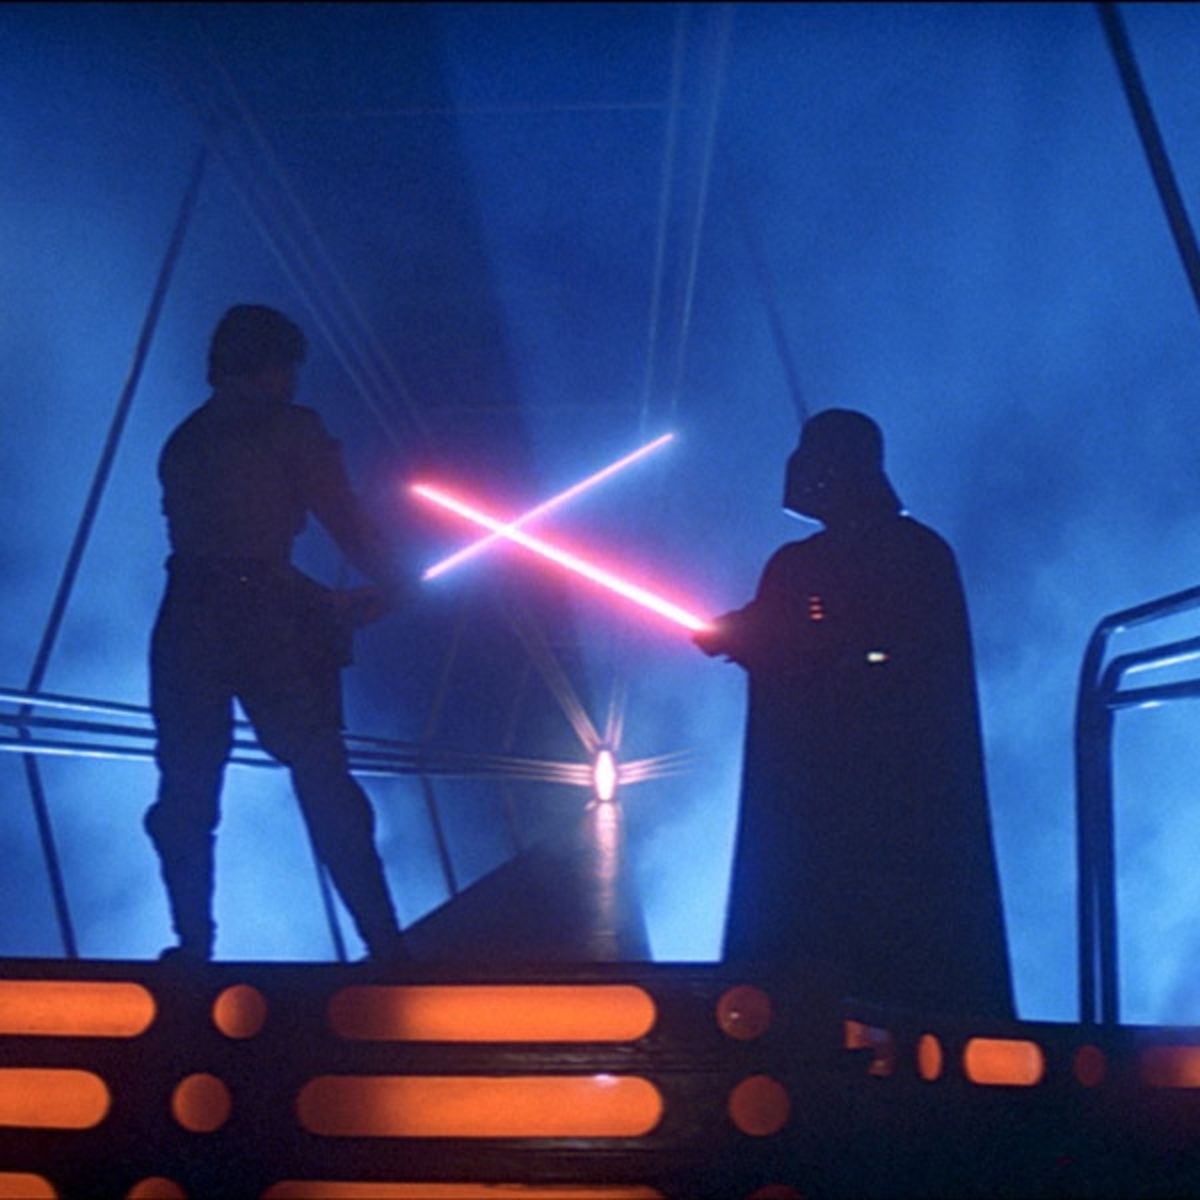 Luke Skywalker prepares to duel Darth Vader.